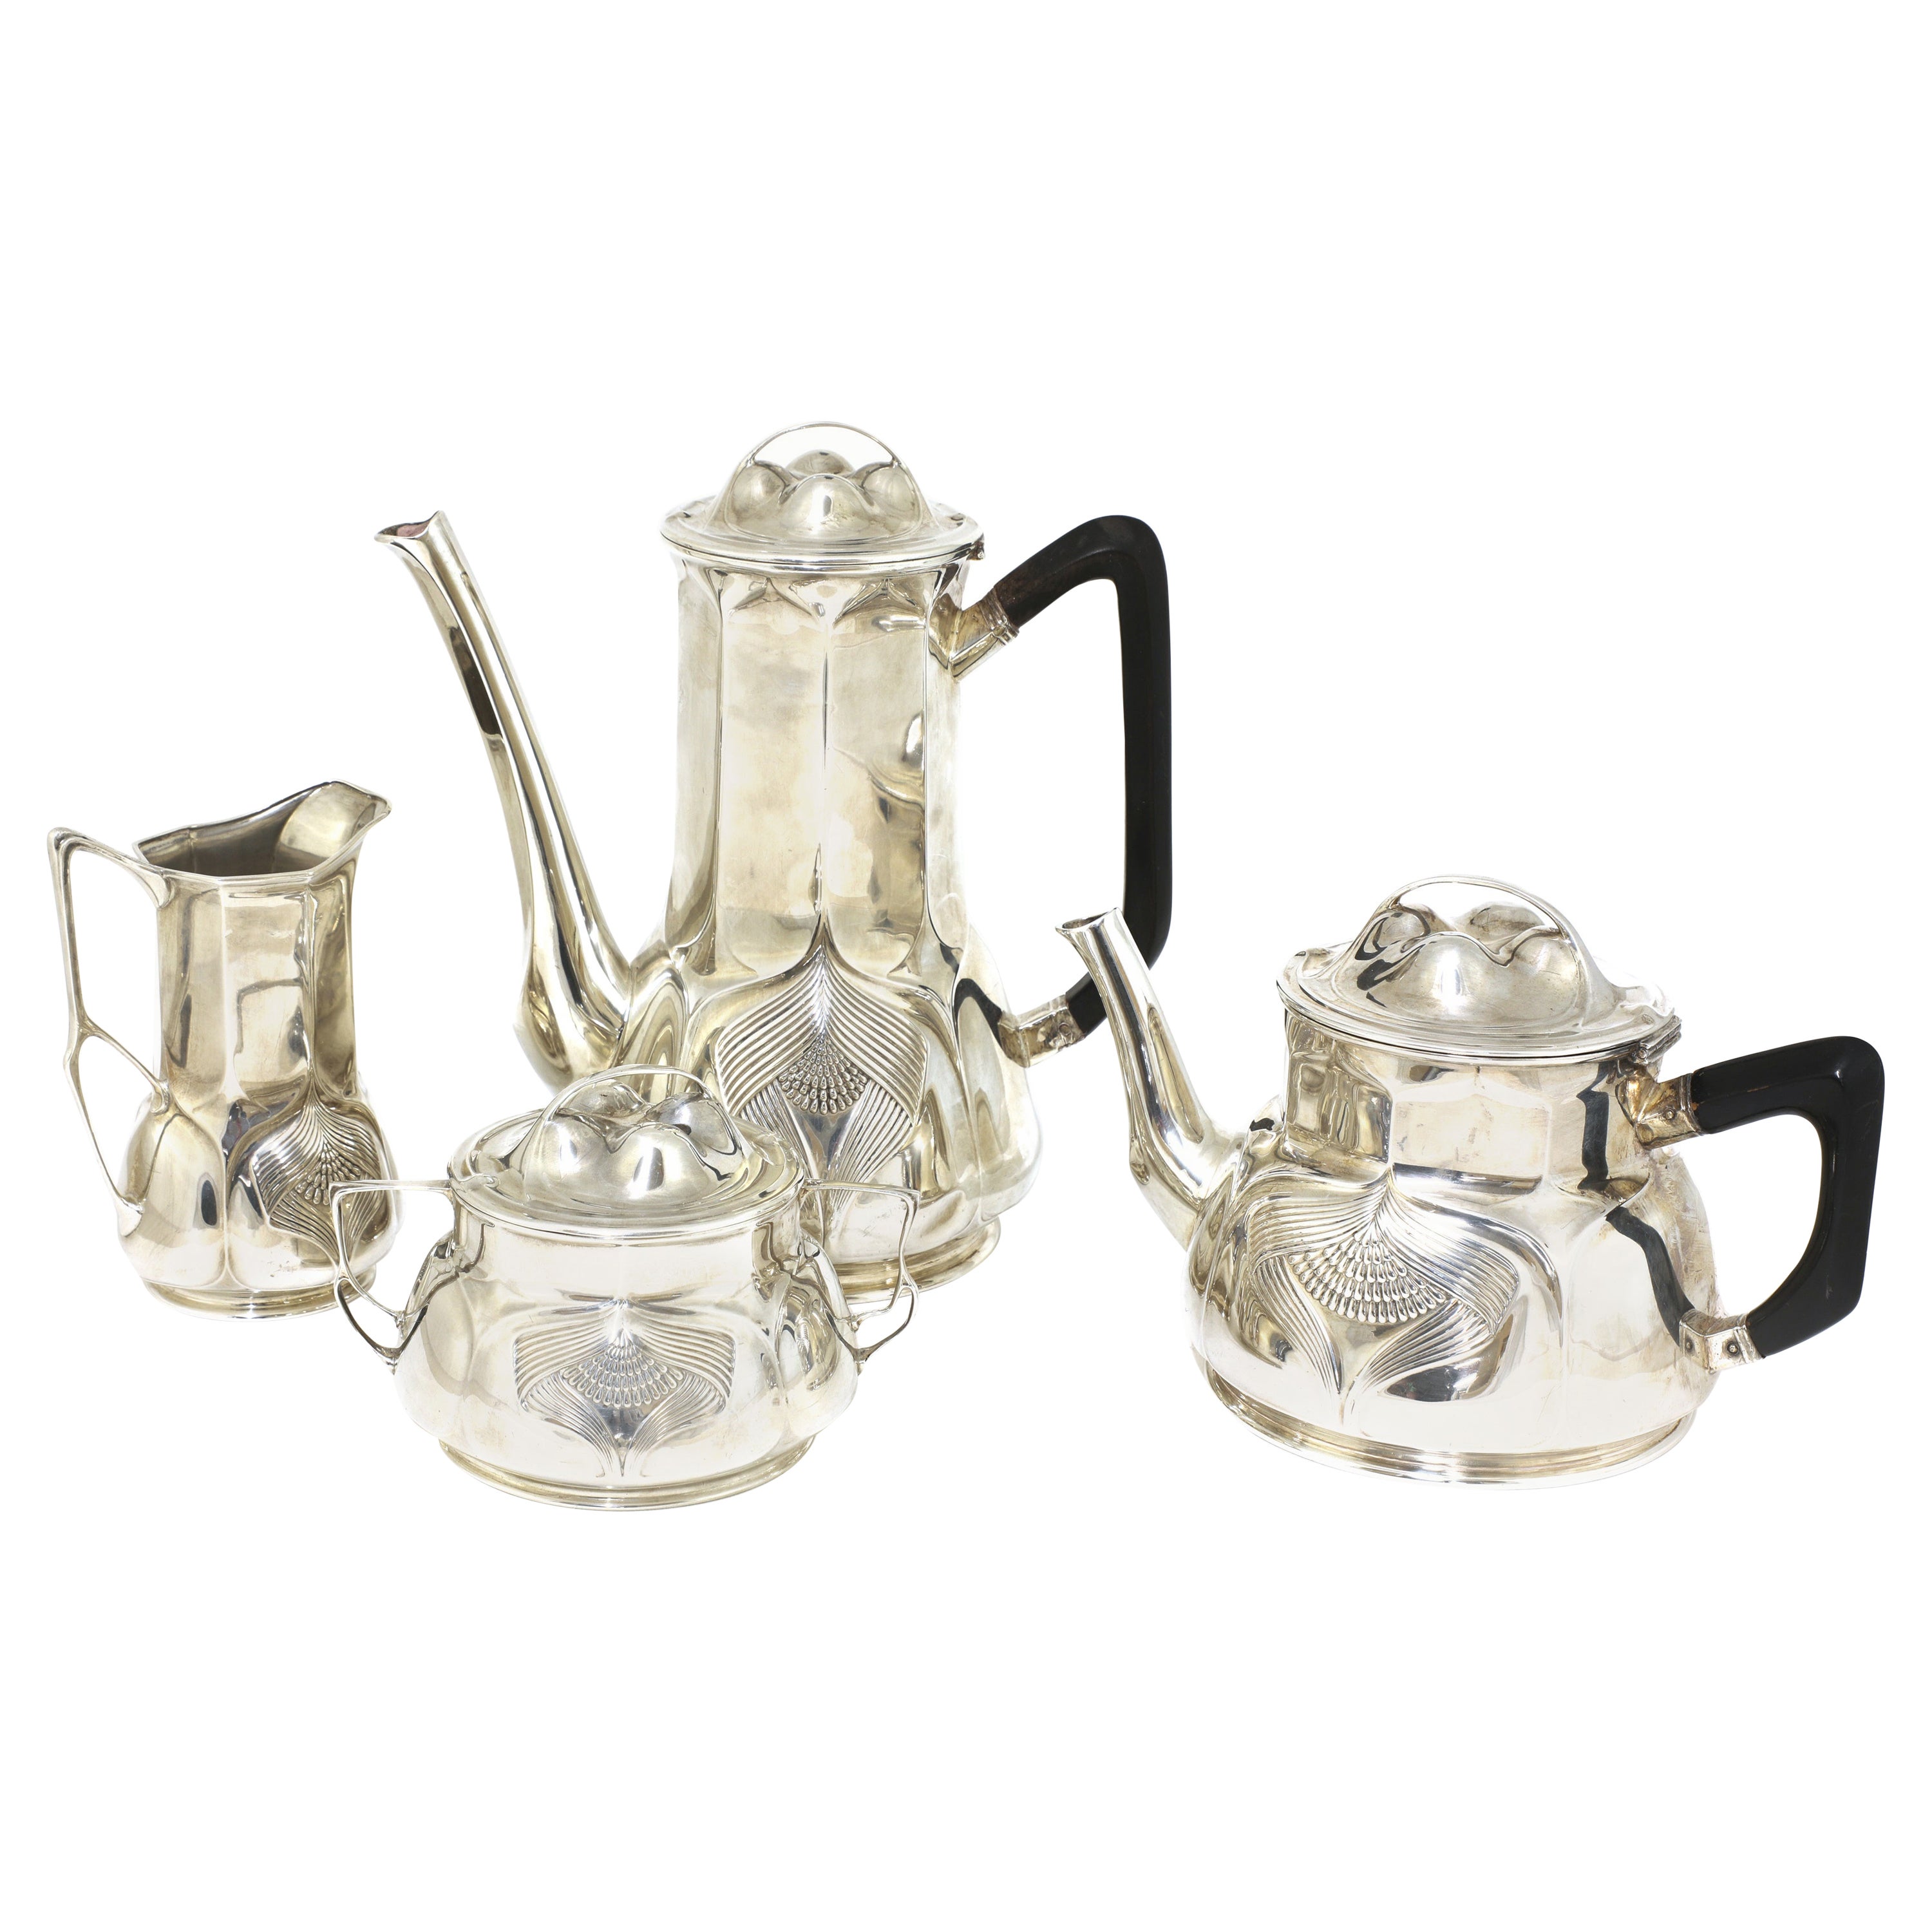 Orivit Jugendstil Sterling Silver Four-Piece Tea and Coffee Service